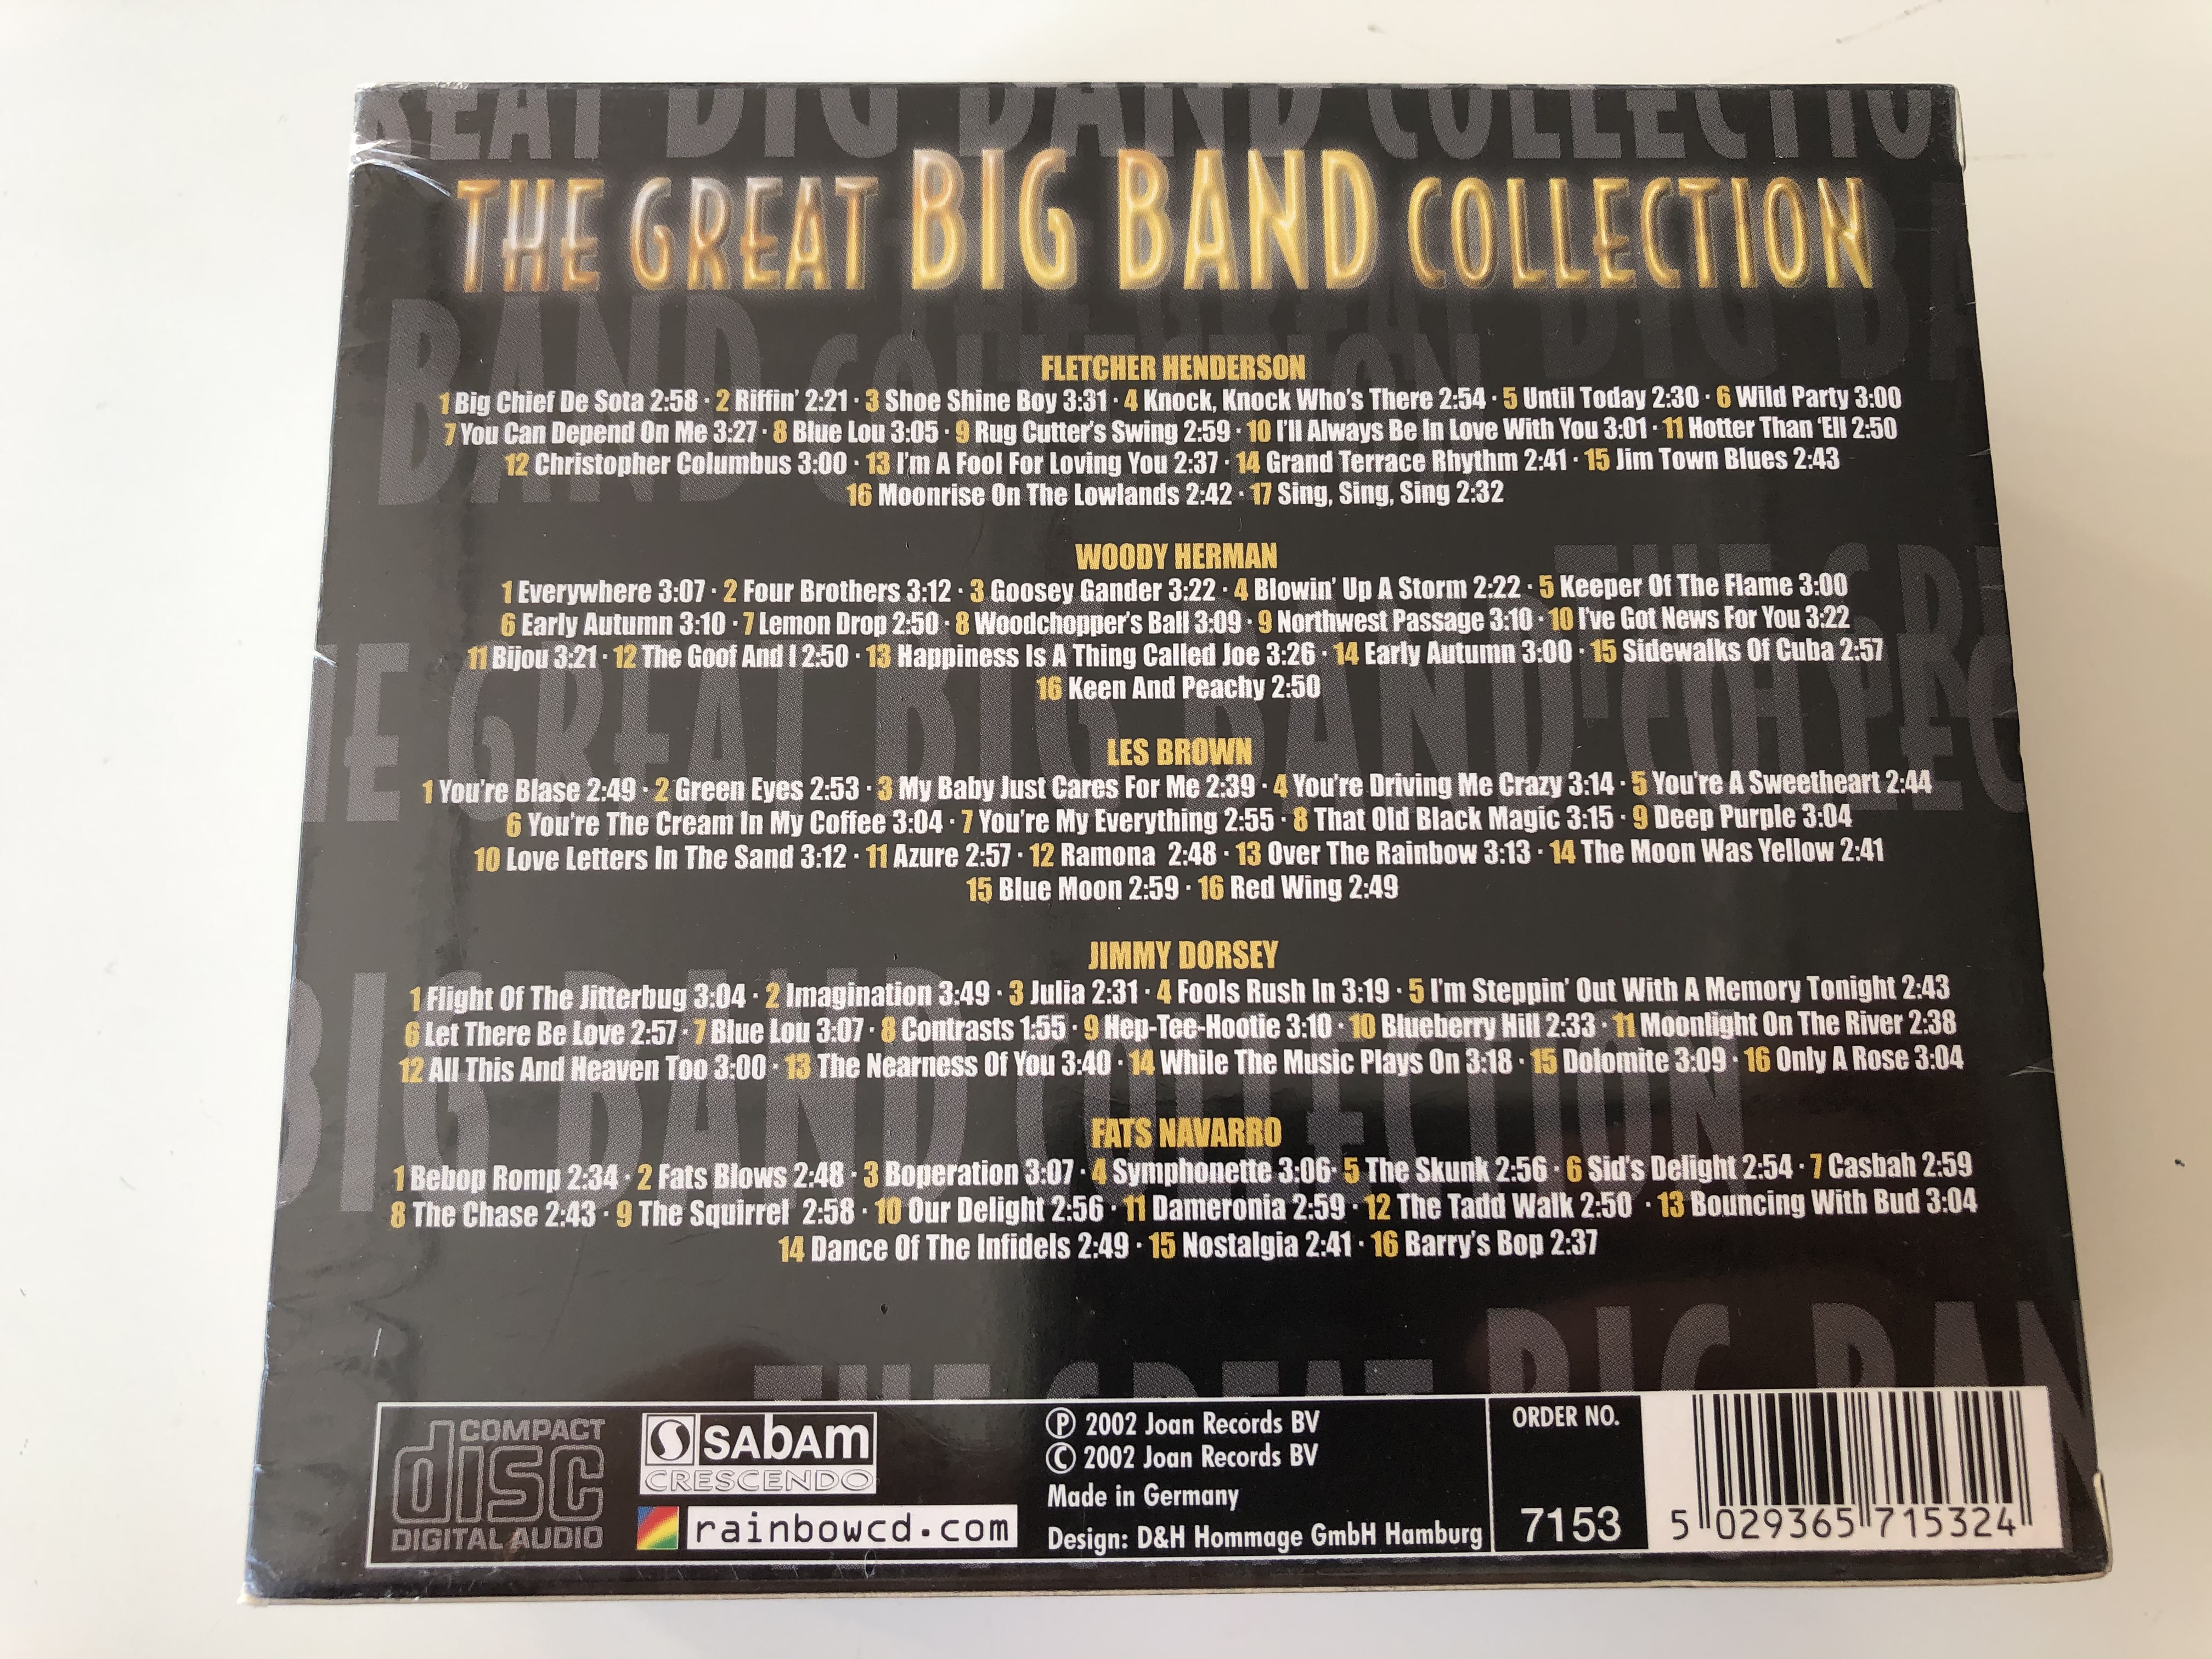 the-great-big-band-collection-fletcher-henderson-woody-herman-les-brown-jimmy-dorsey-fats-navarro-5-cd-box-digital-remastered-joan-records-bv-5x-audio-cd-set-box-2002-7153-4-.jpg